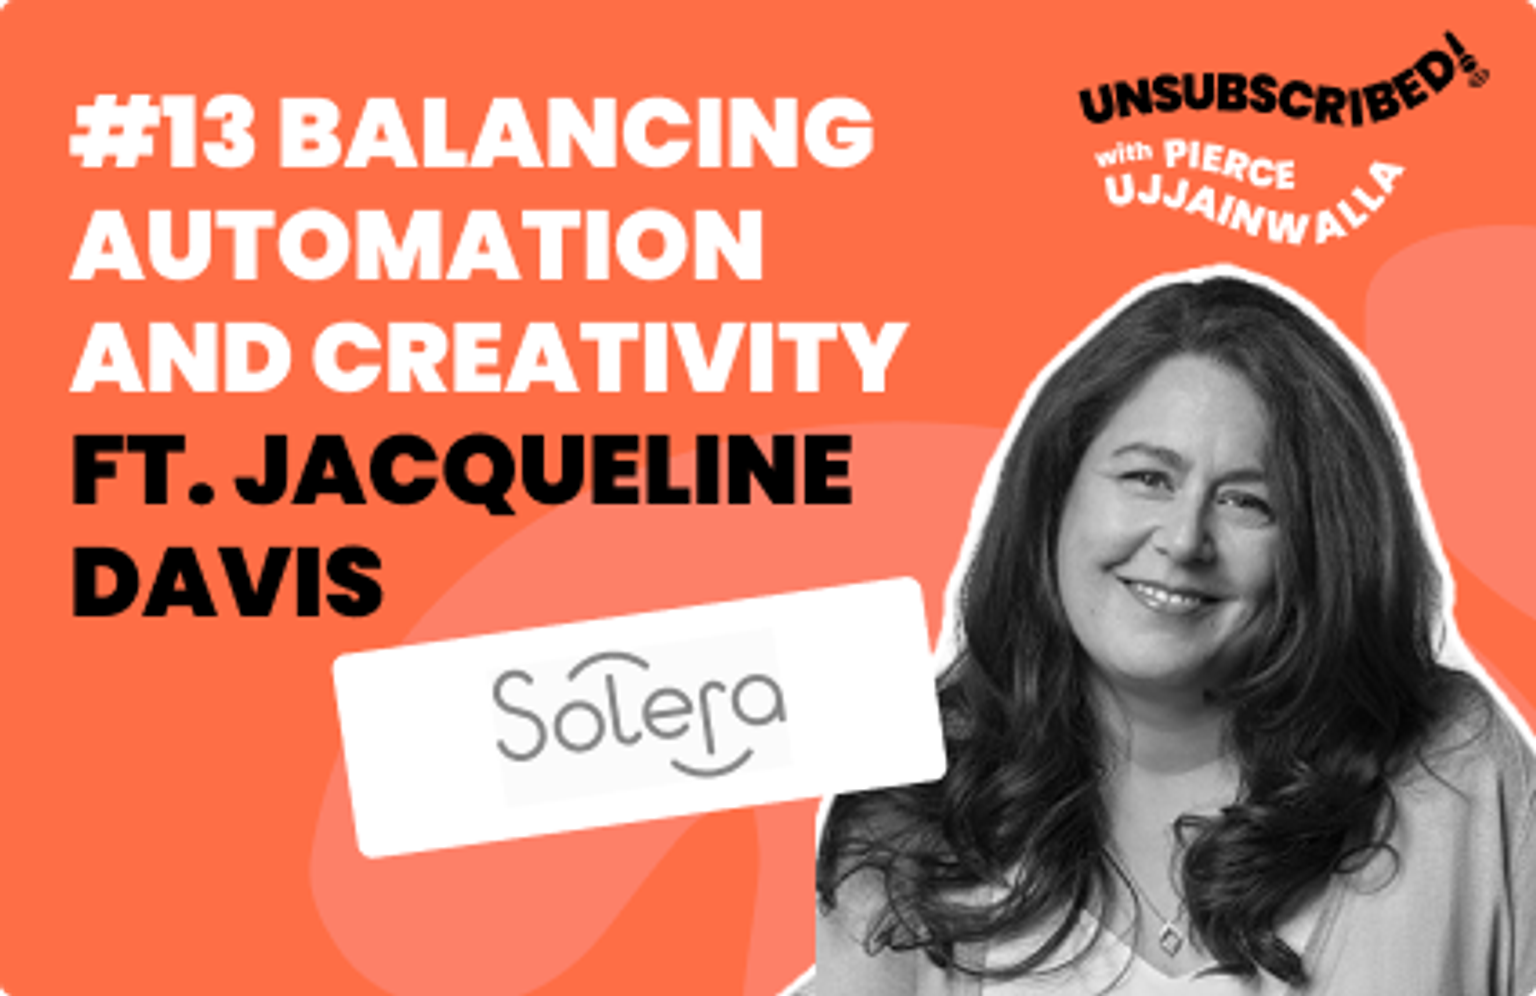 #13 Balancing Automation with Creativity ft. Jacqueline Davis, Solera